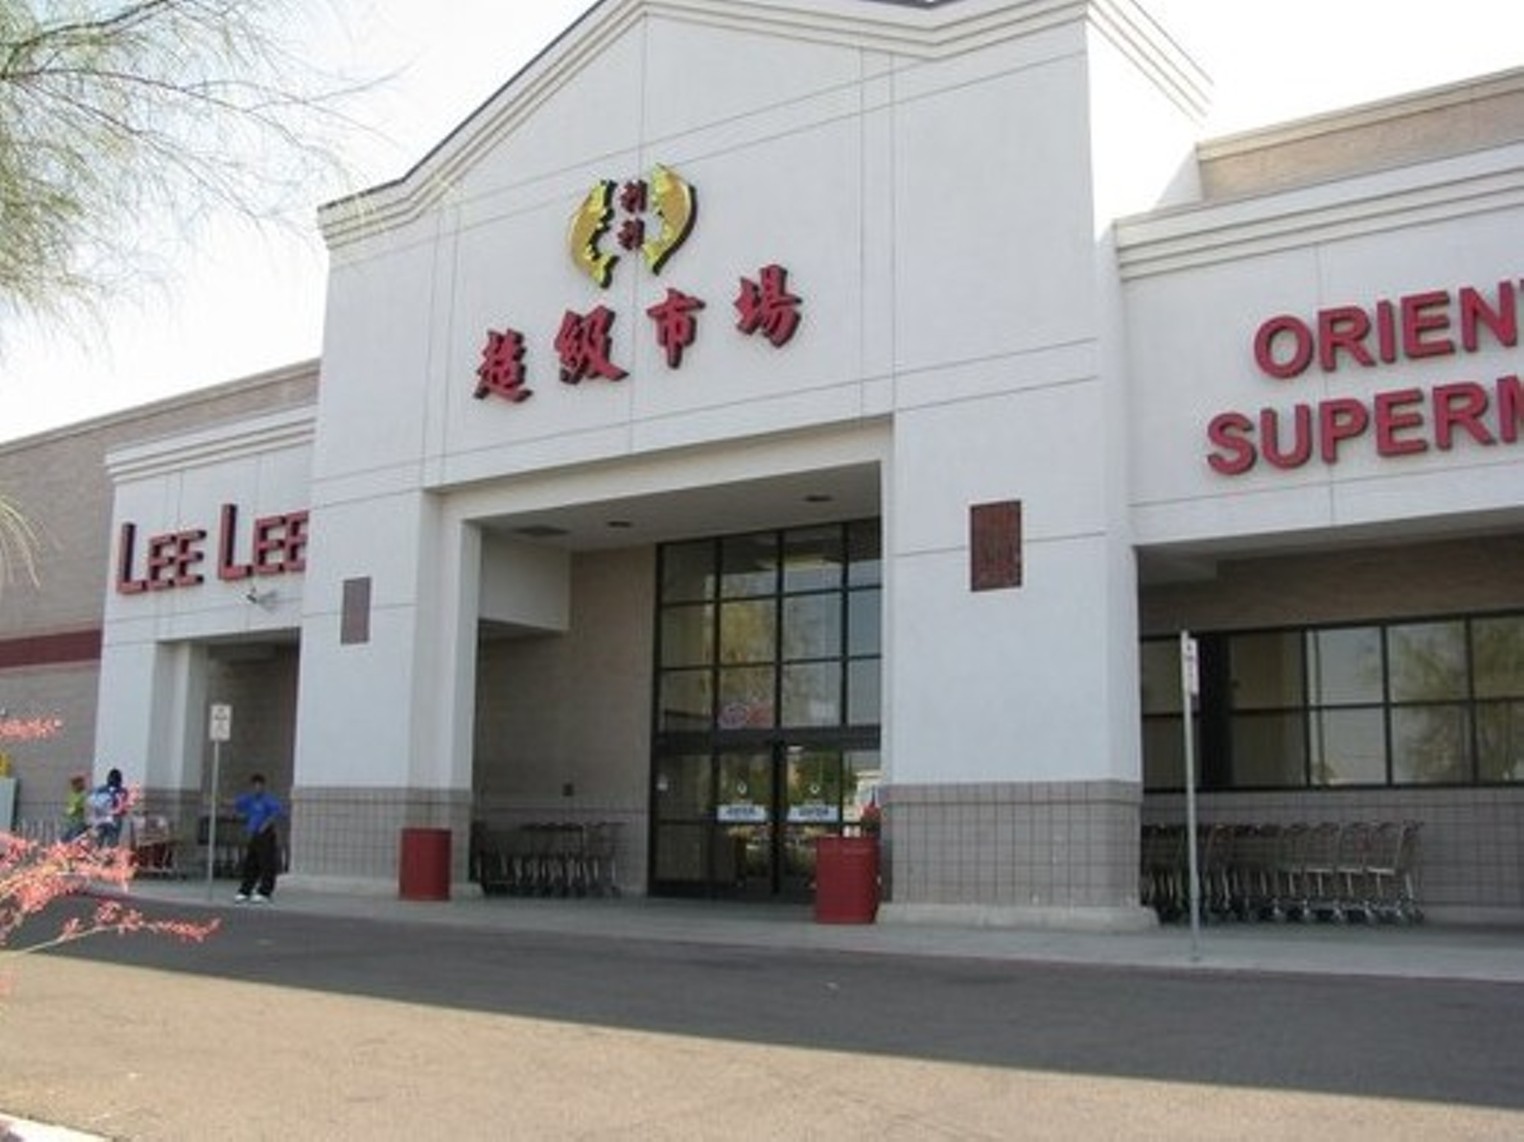 Lee Lee International Supermarket | Phoenix Restaurant Guide 2022 | New  Times